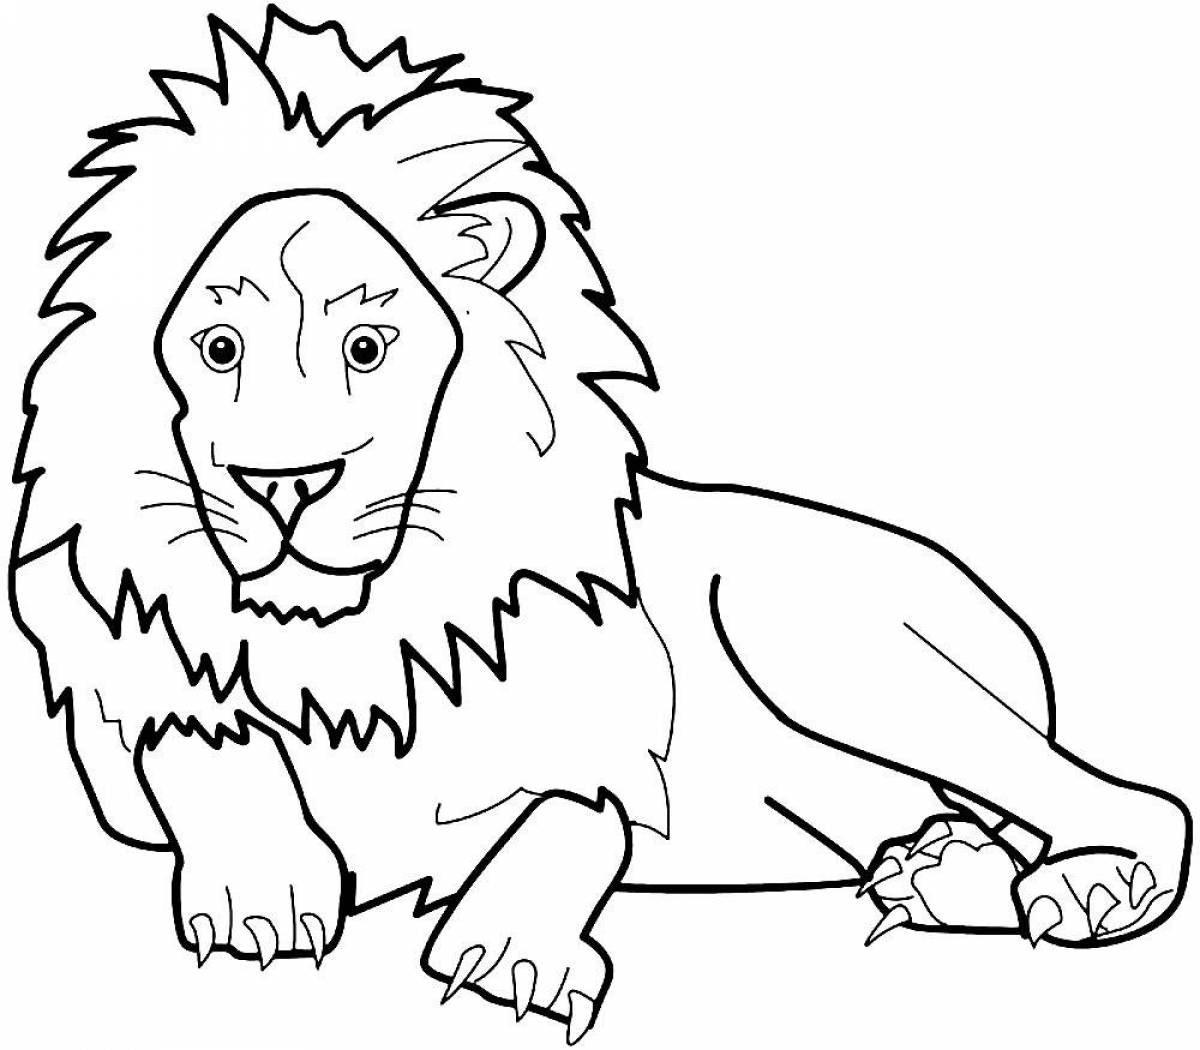 Coloring book brave lion